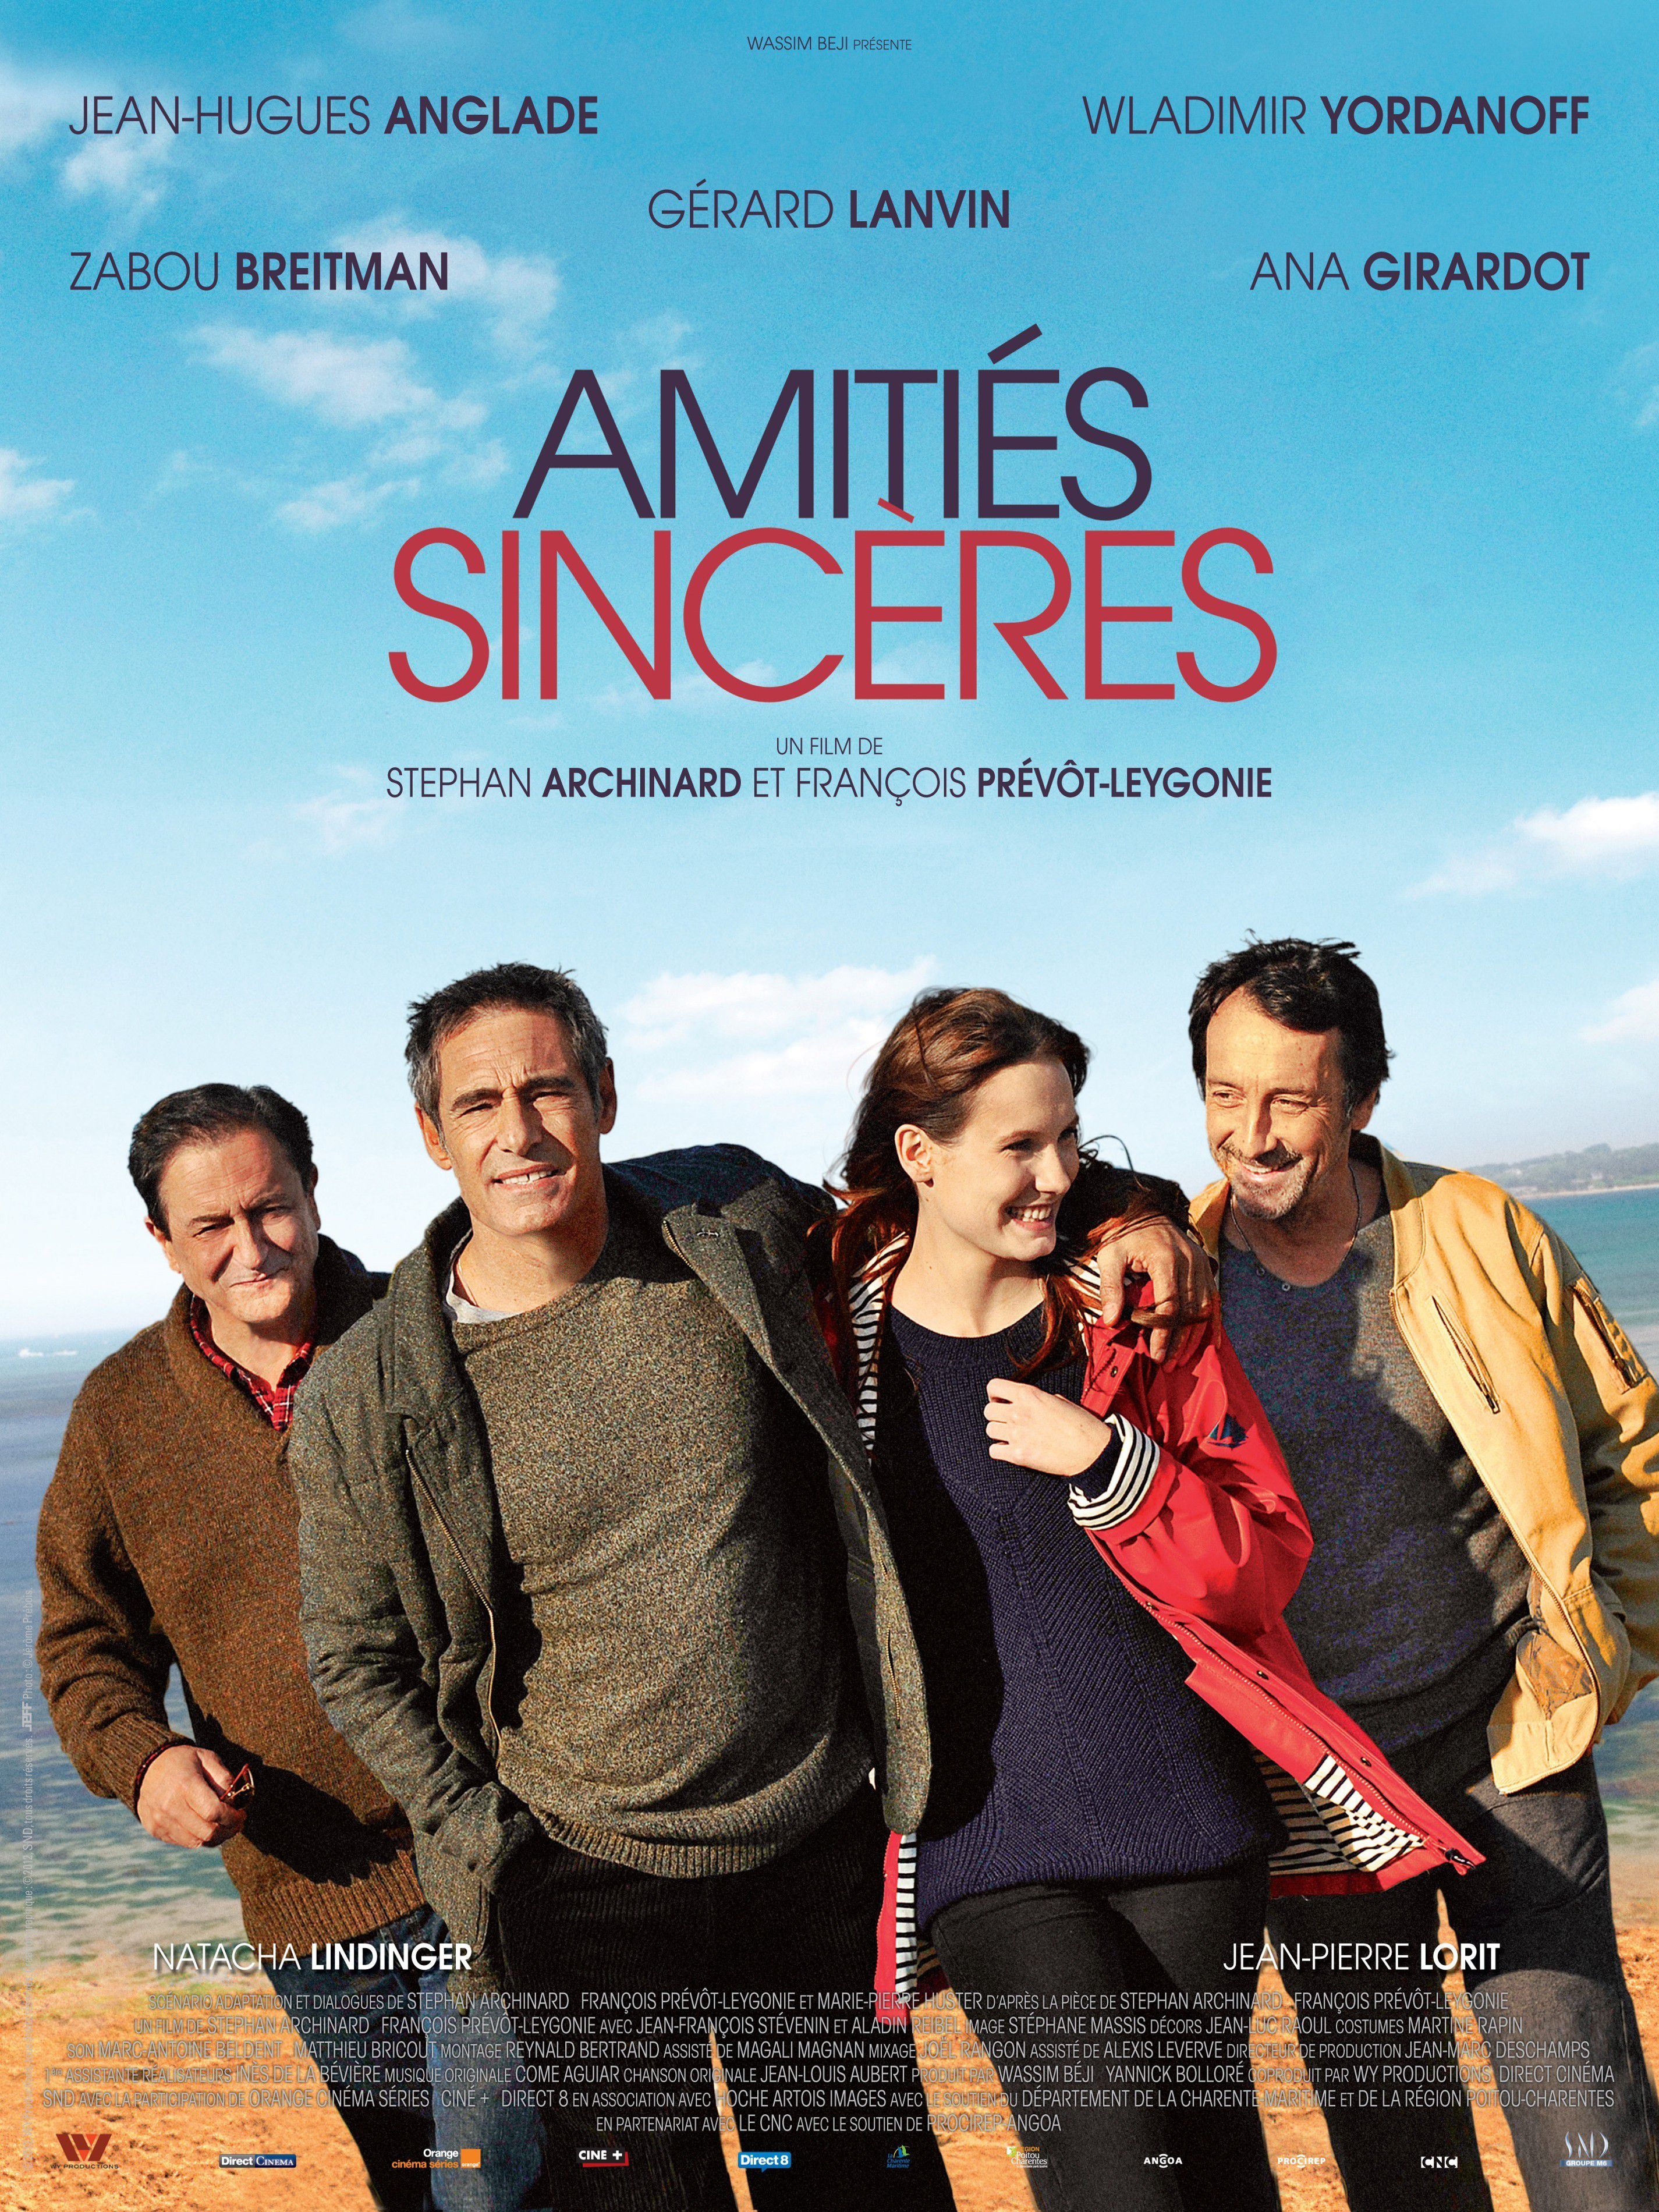 Amitiés sincères - Film (2013) streaming VF gratuit complet